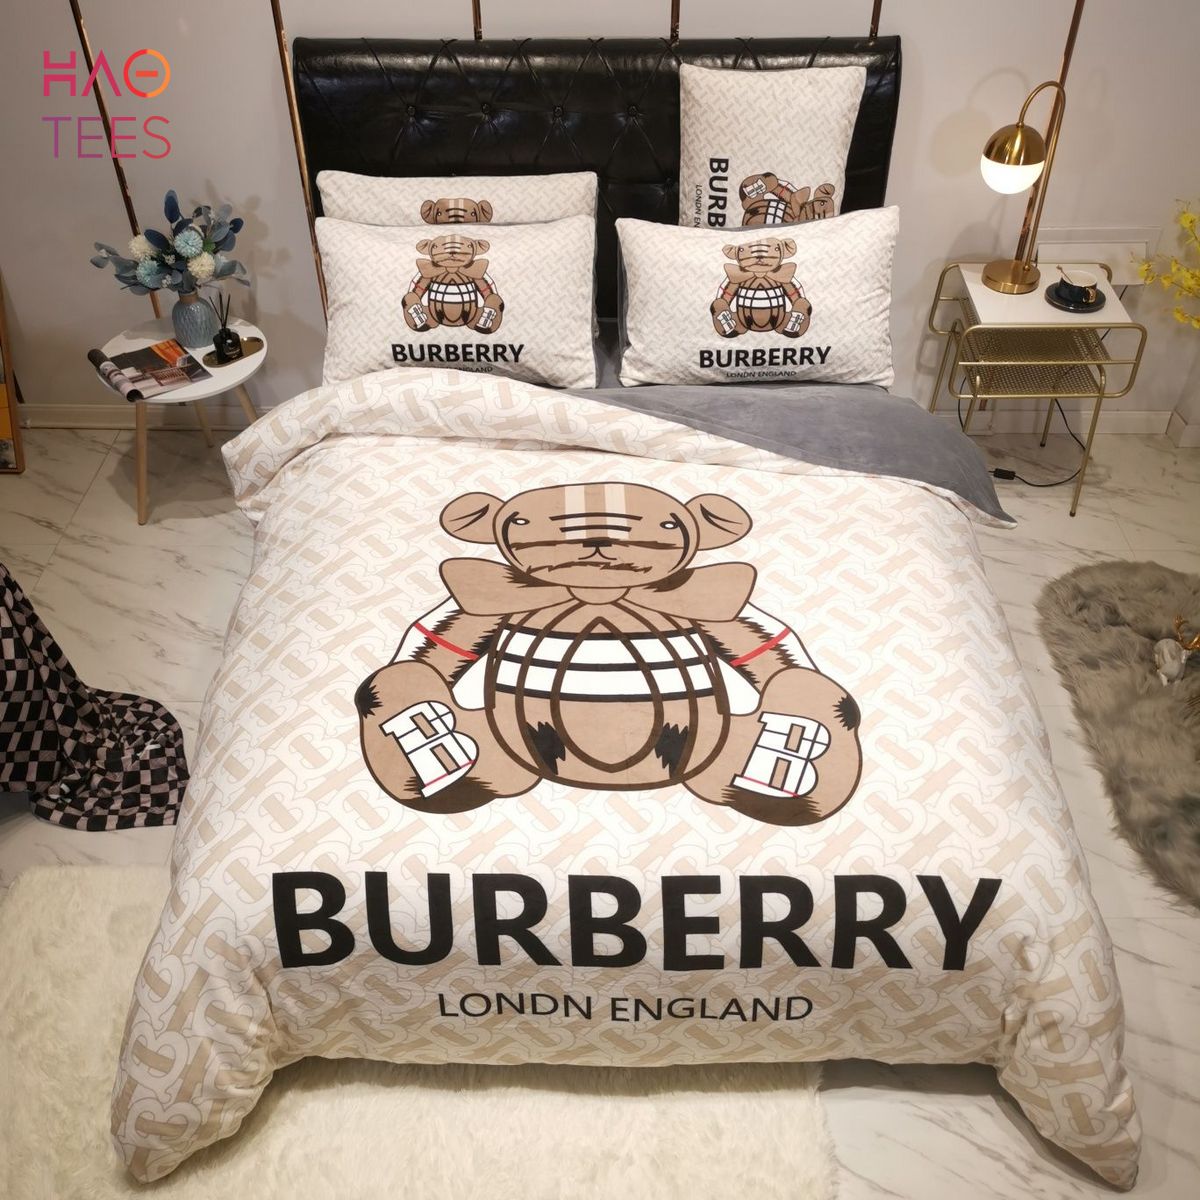 Burberry London Luxury Brand Bedding Sets And Bedroom Sets POD Design